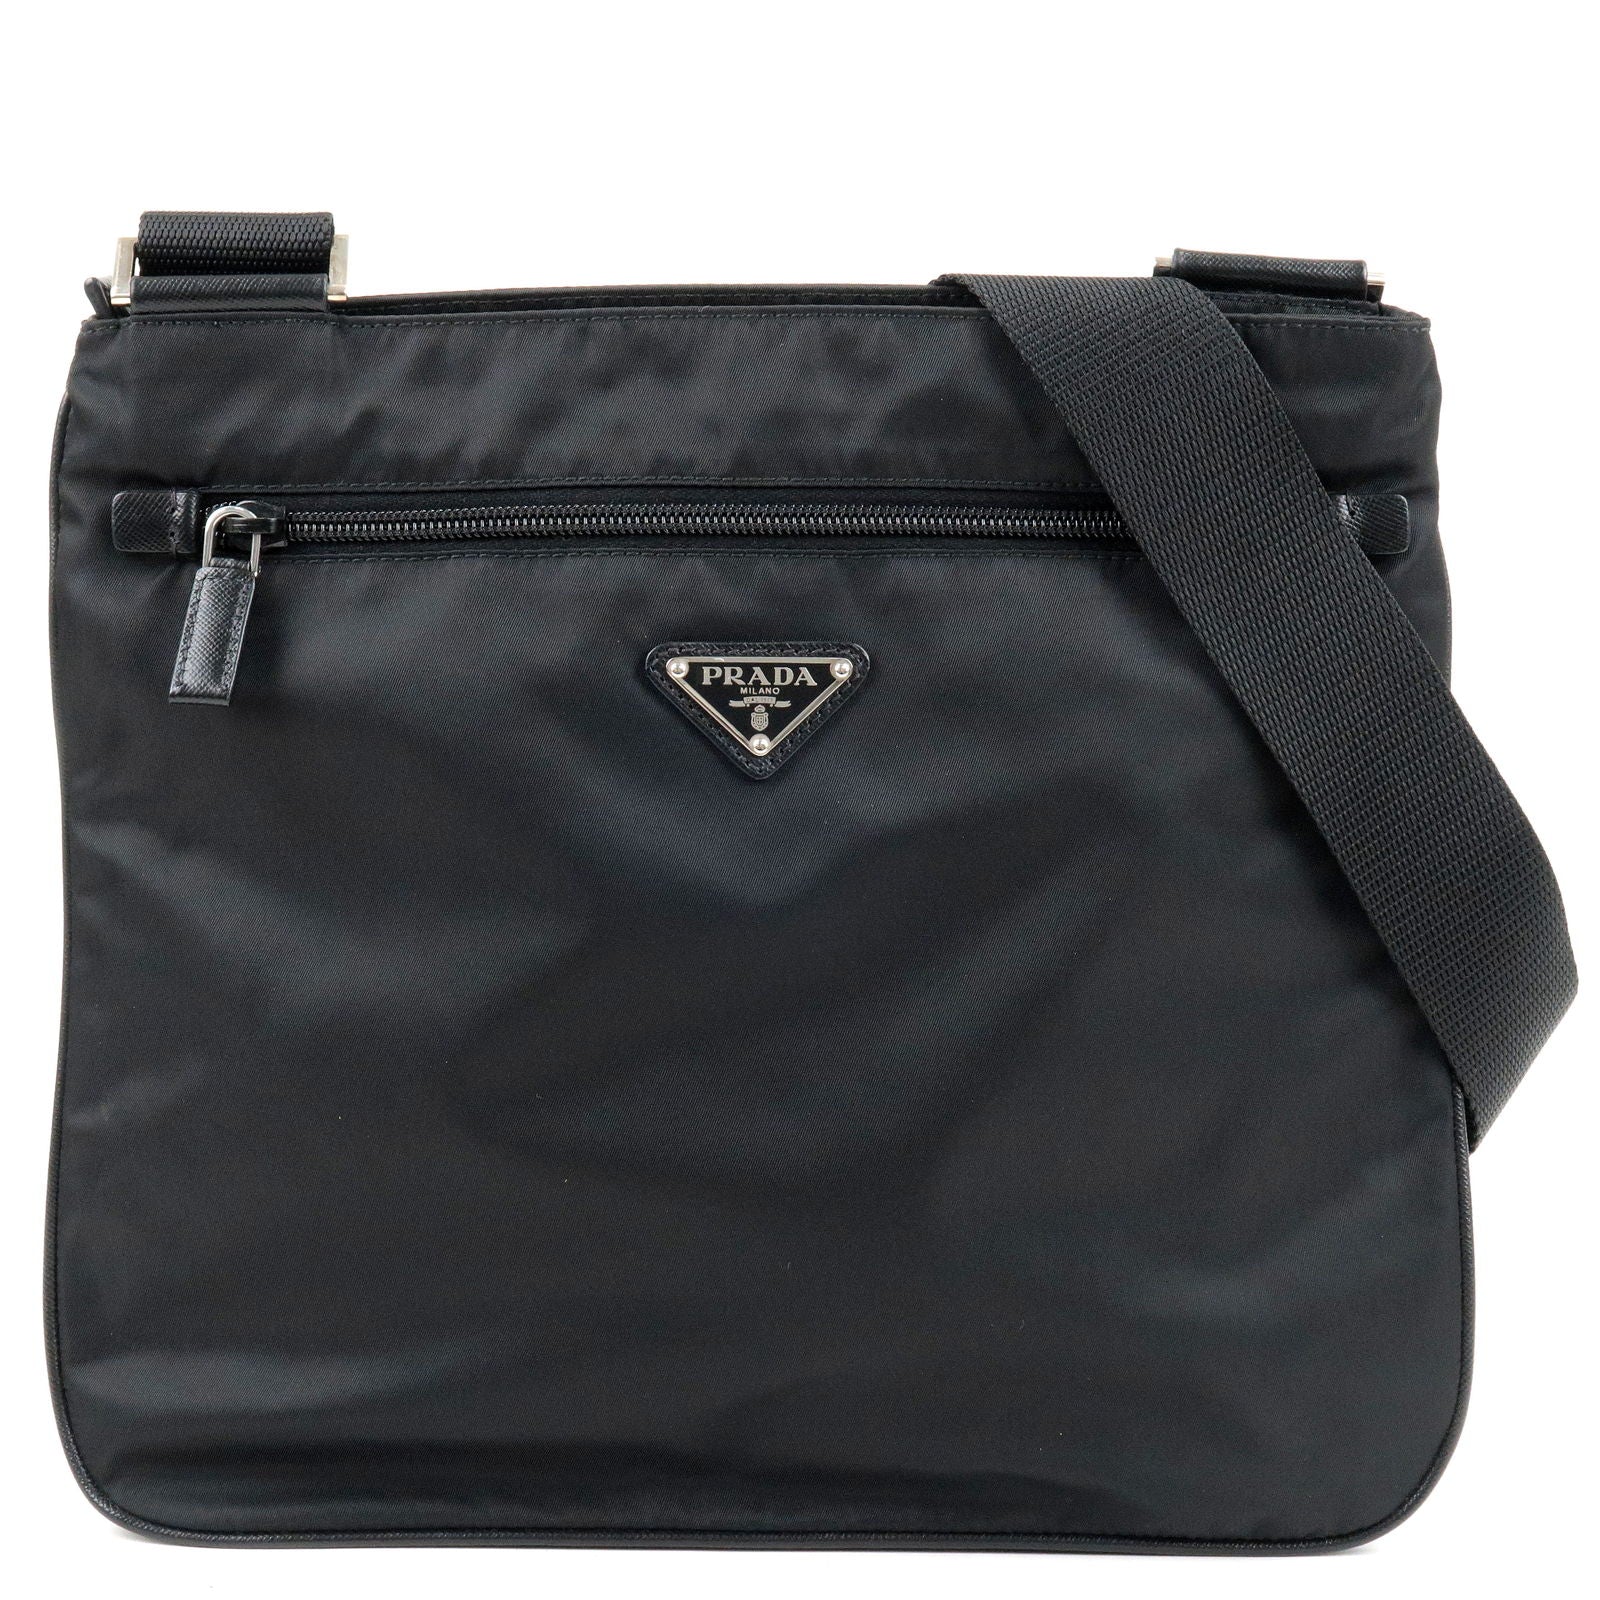 PRADA-Logo-Nylon-Leather-Shoulder-Bag-NERO-Black-VA0563